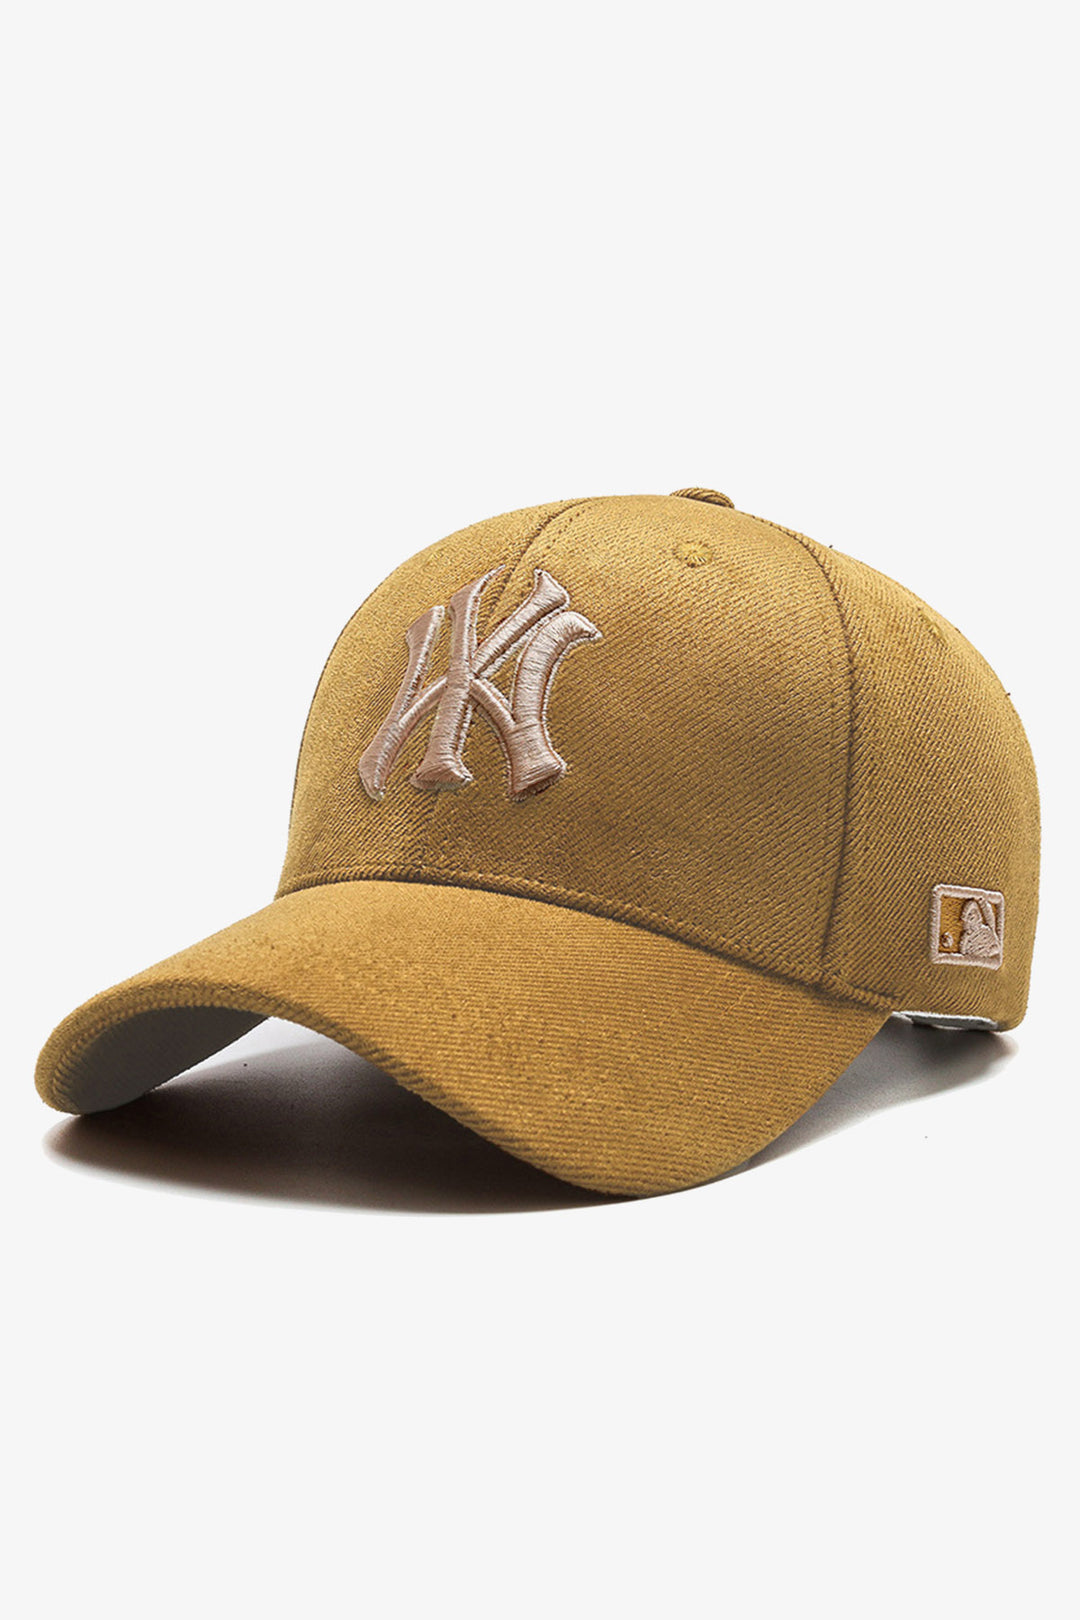 NY Classic Brown Baseball Cap - A23 - MCP077R